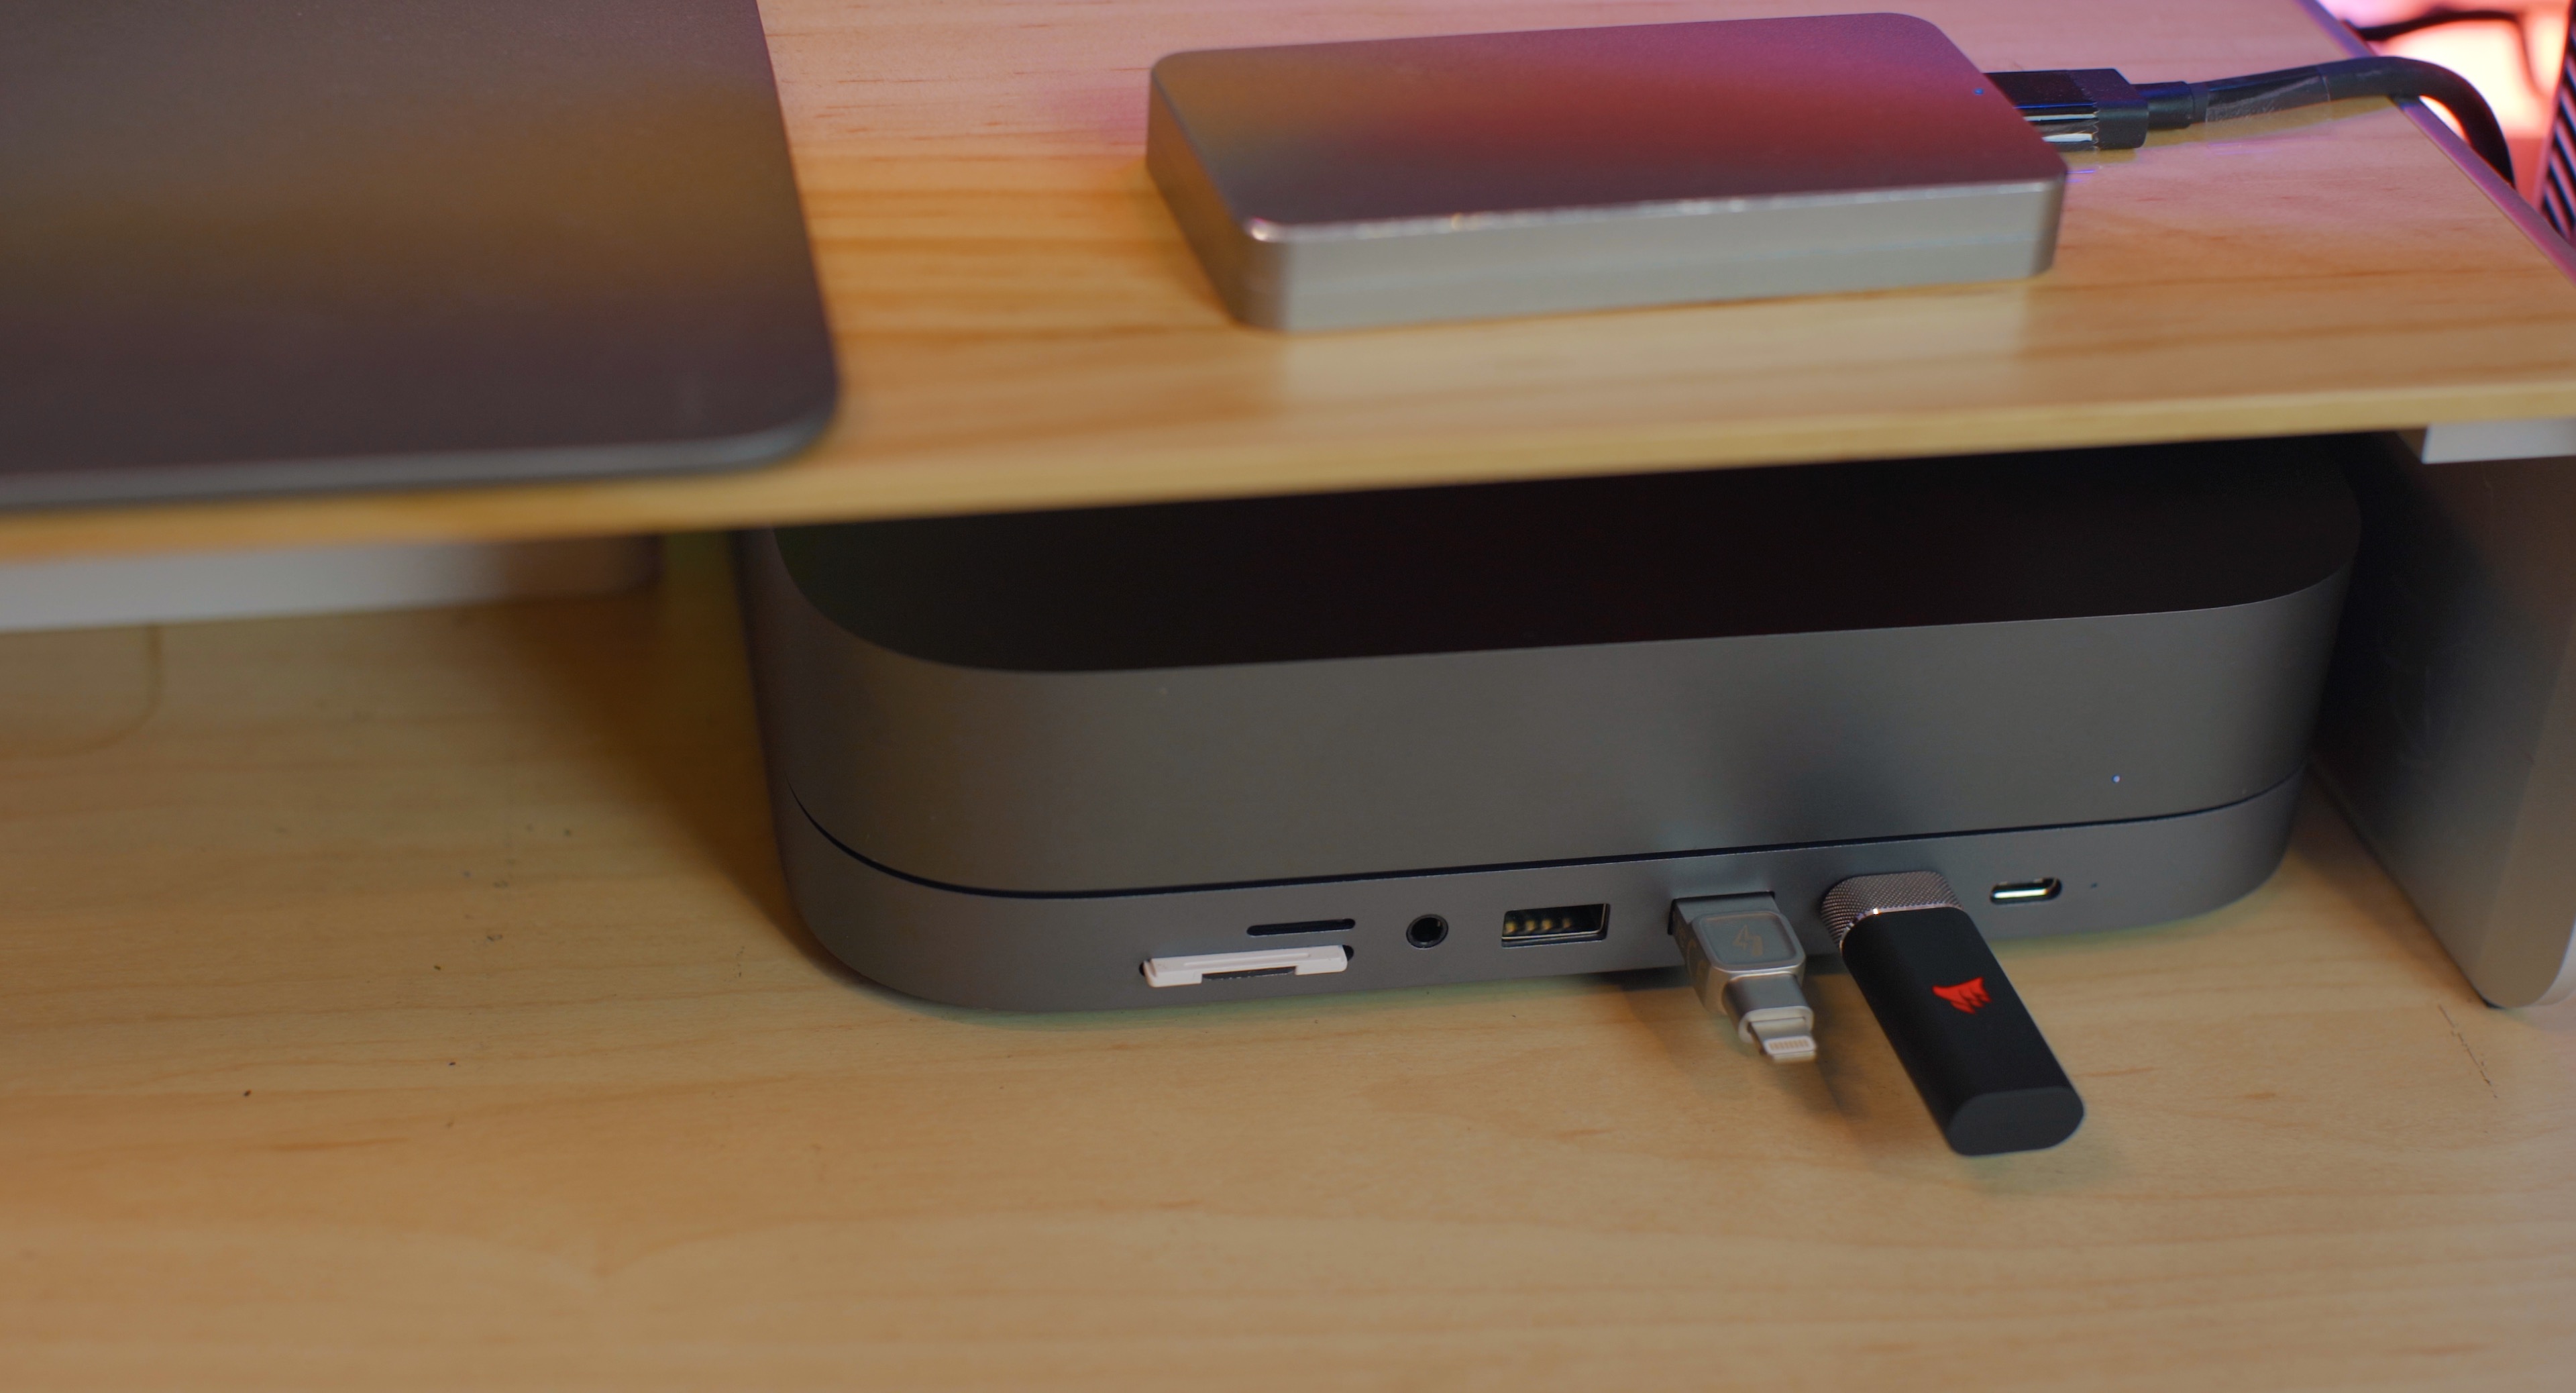 Satechi Pro Hub Mini brings more ports to MacBook Pro - 9to5Mac